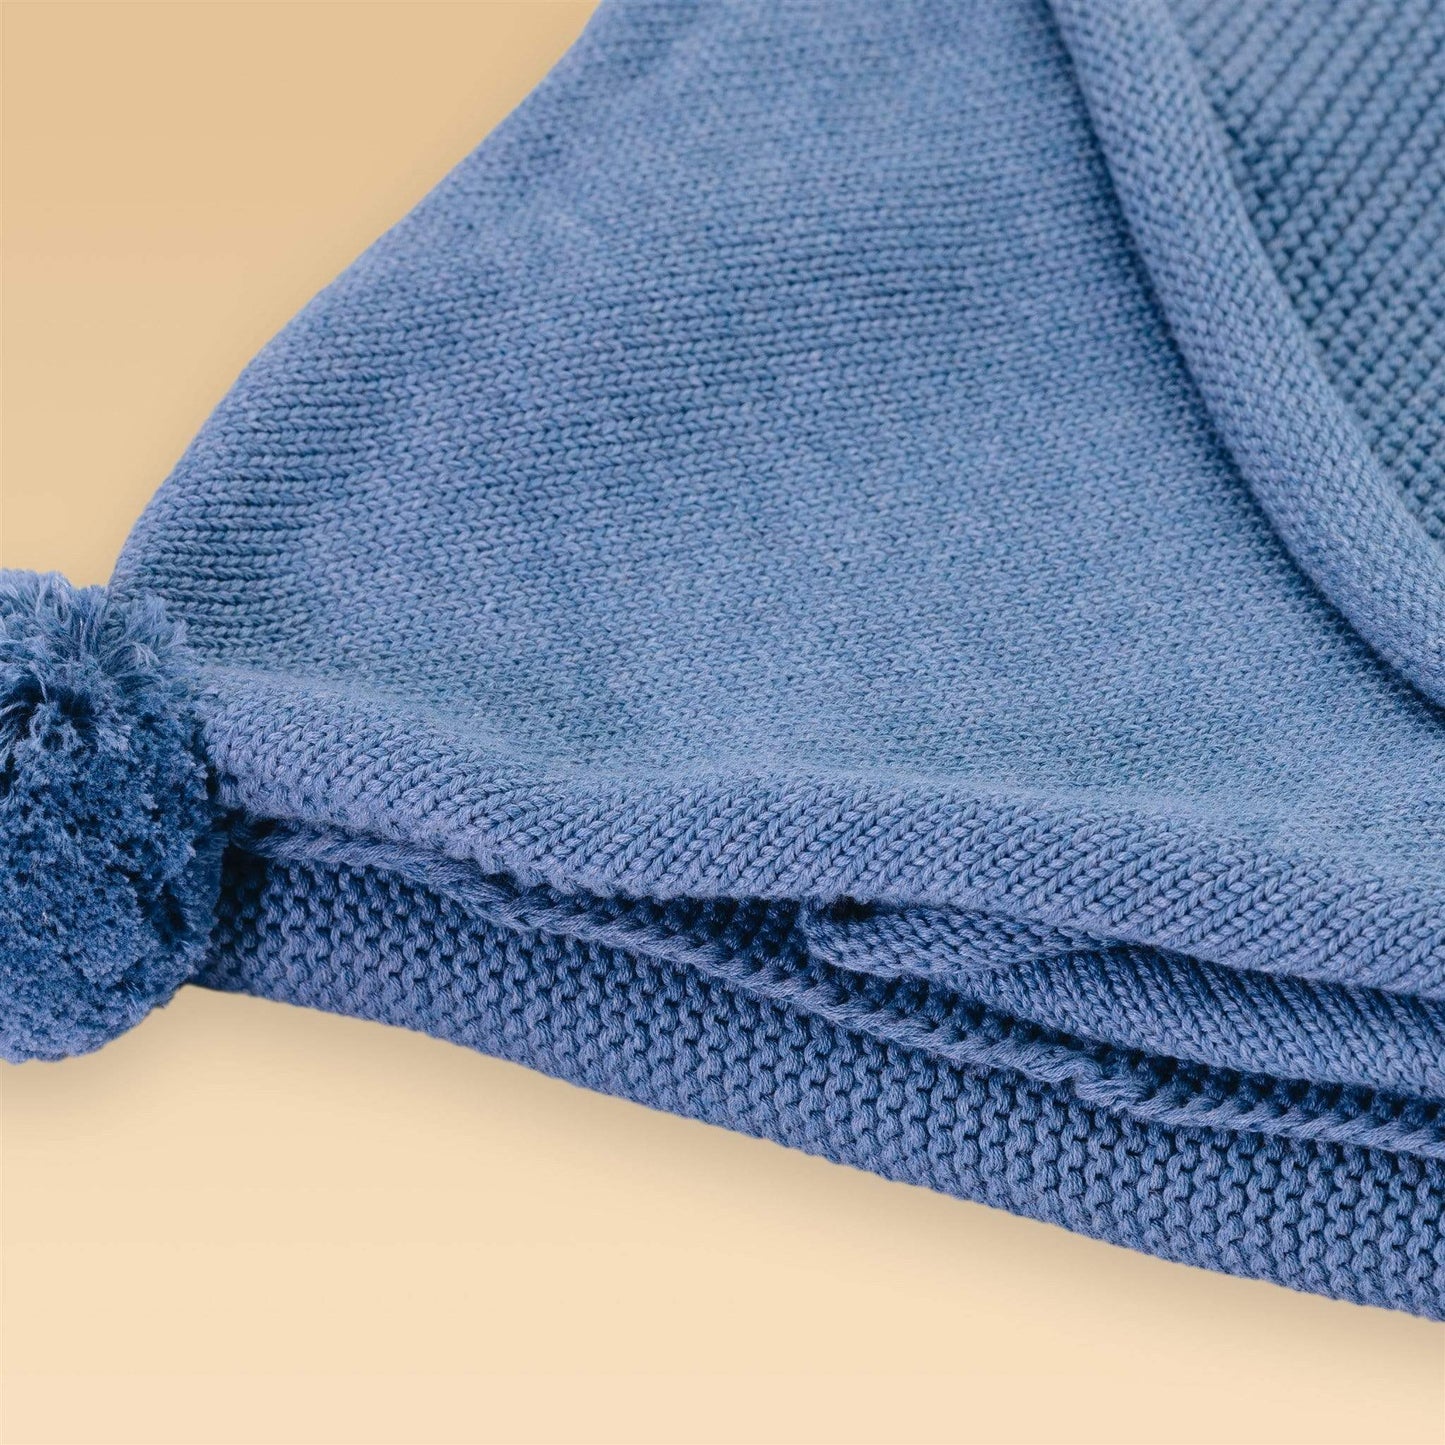 Happymess Blanket O/S Hooded Blanket With Pom Pom - Ocean Blue